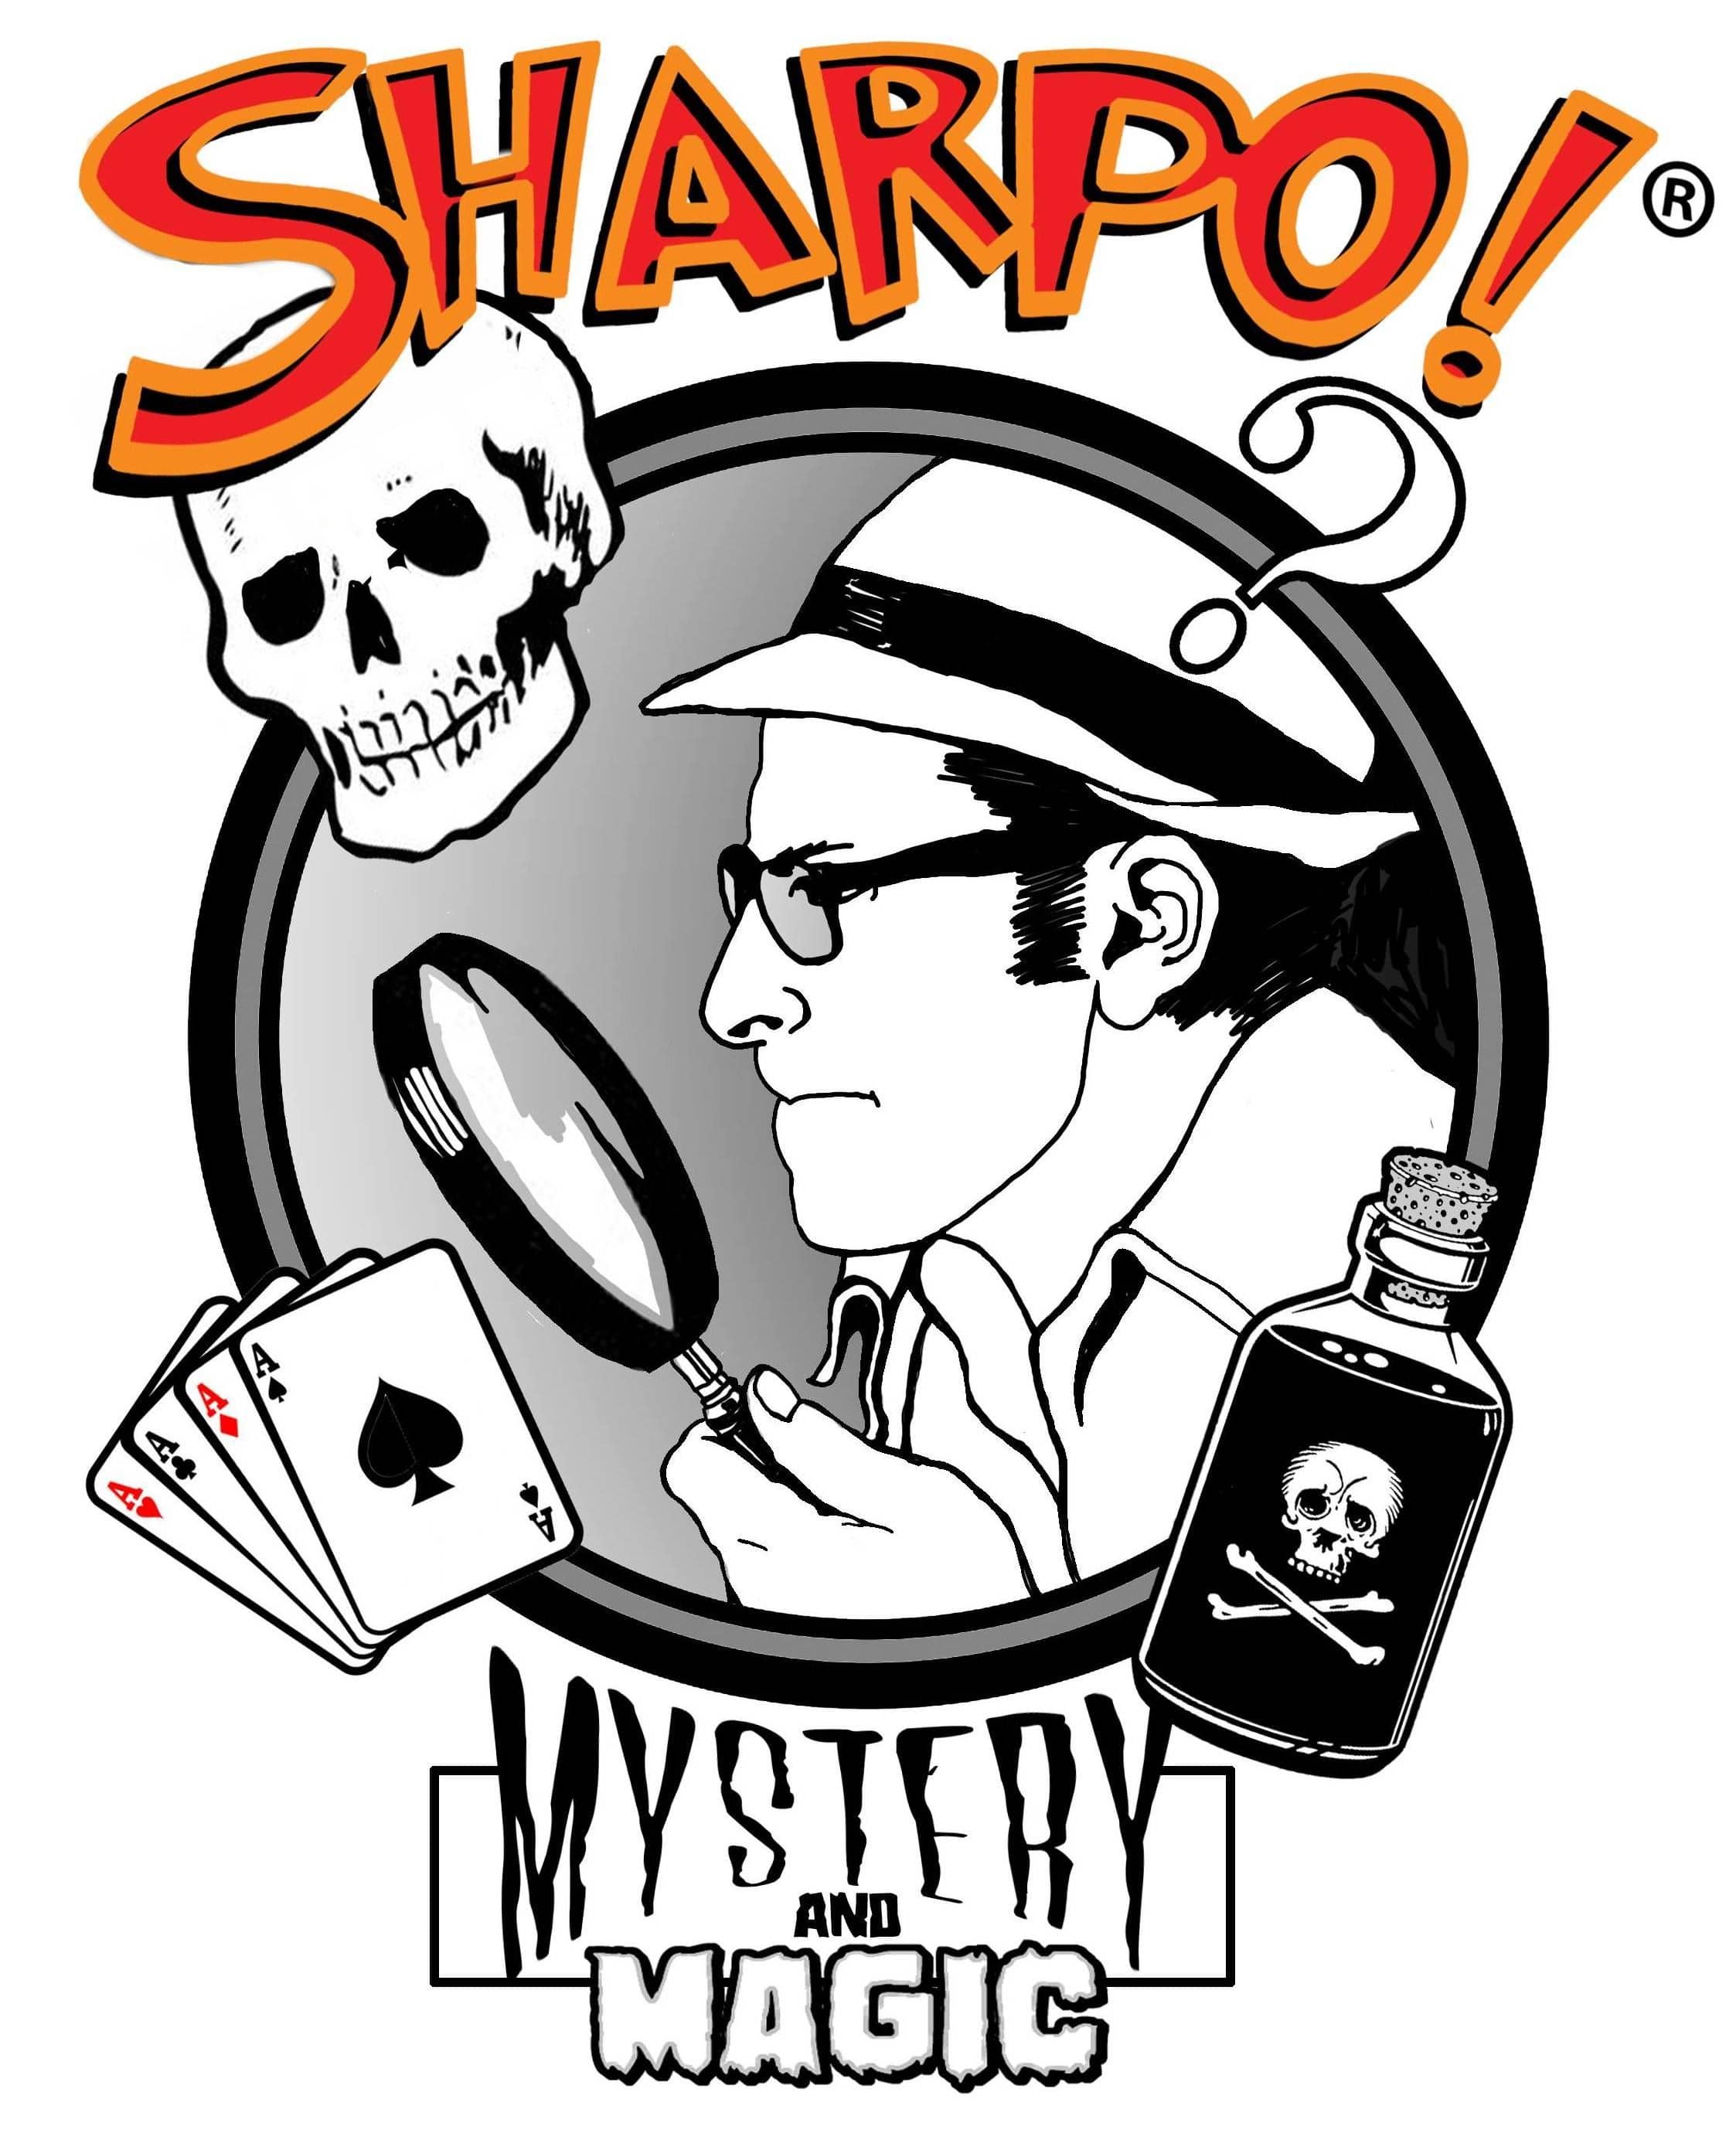 Sharpo Cartoon Graphic Mystery and Magic logo graphic.